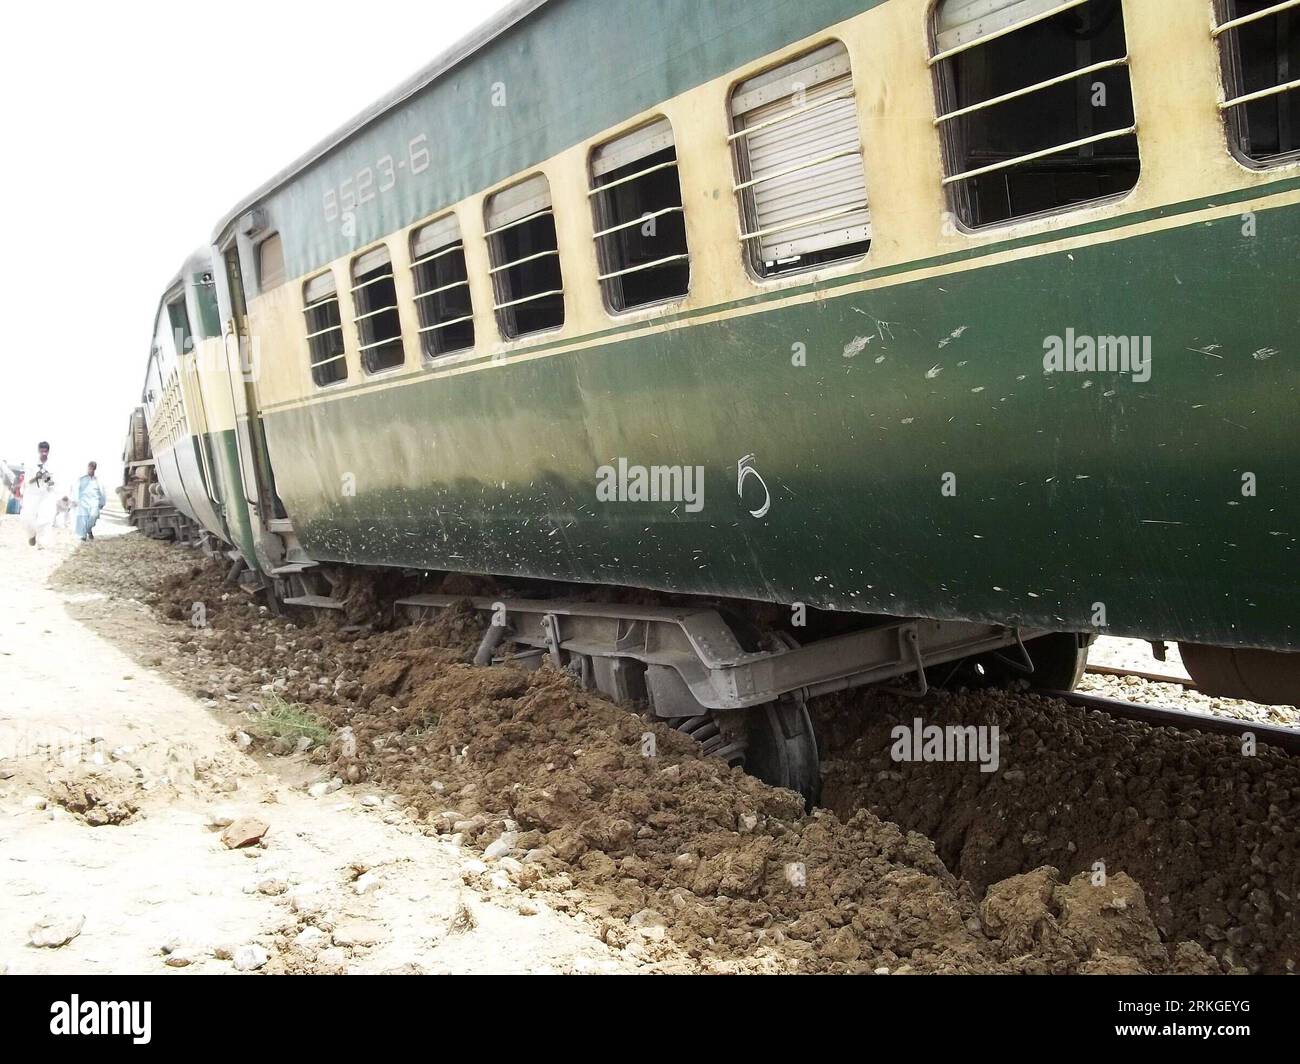 Bildnummer: 55588773  Datum: 12.07.2011  Copyright: imago/Xinhua (110712) -- DERA MURAD JAMALI, July 12, 2011 (Xinhua) -- Derailed train compartments are seen after a blast in Dera Murad Jamali, southwest Pakistan, on July 12, 2011. A Karachi-Quetta bound train was attacked by a remote-controlled bomb near Dera Murad Jamali on Tuesday, causing five compartments derailed and its driver injured. (Xinhua/Hassan) (yt) PAKISTAN-DERA MURAD JAMALI-RAILWAY-ATTACK PUBLICATIONxNOTxINxCHN Gesellschaft Bahn Verkehr Zugunglück entgleist Zug Unglück xdf x0x 2011 quer     Bildnummer 55588773 Date 12 07 2011 Stock Photo